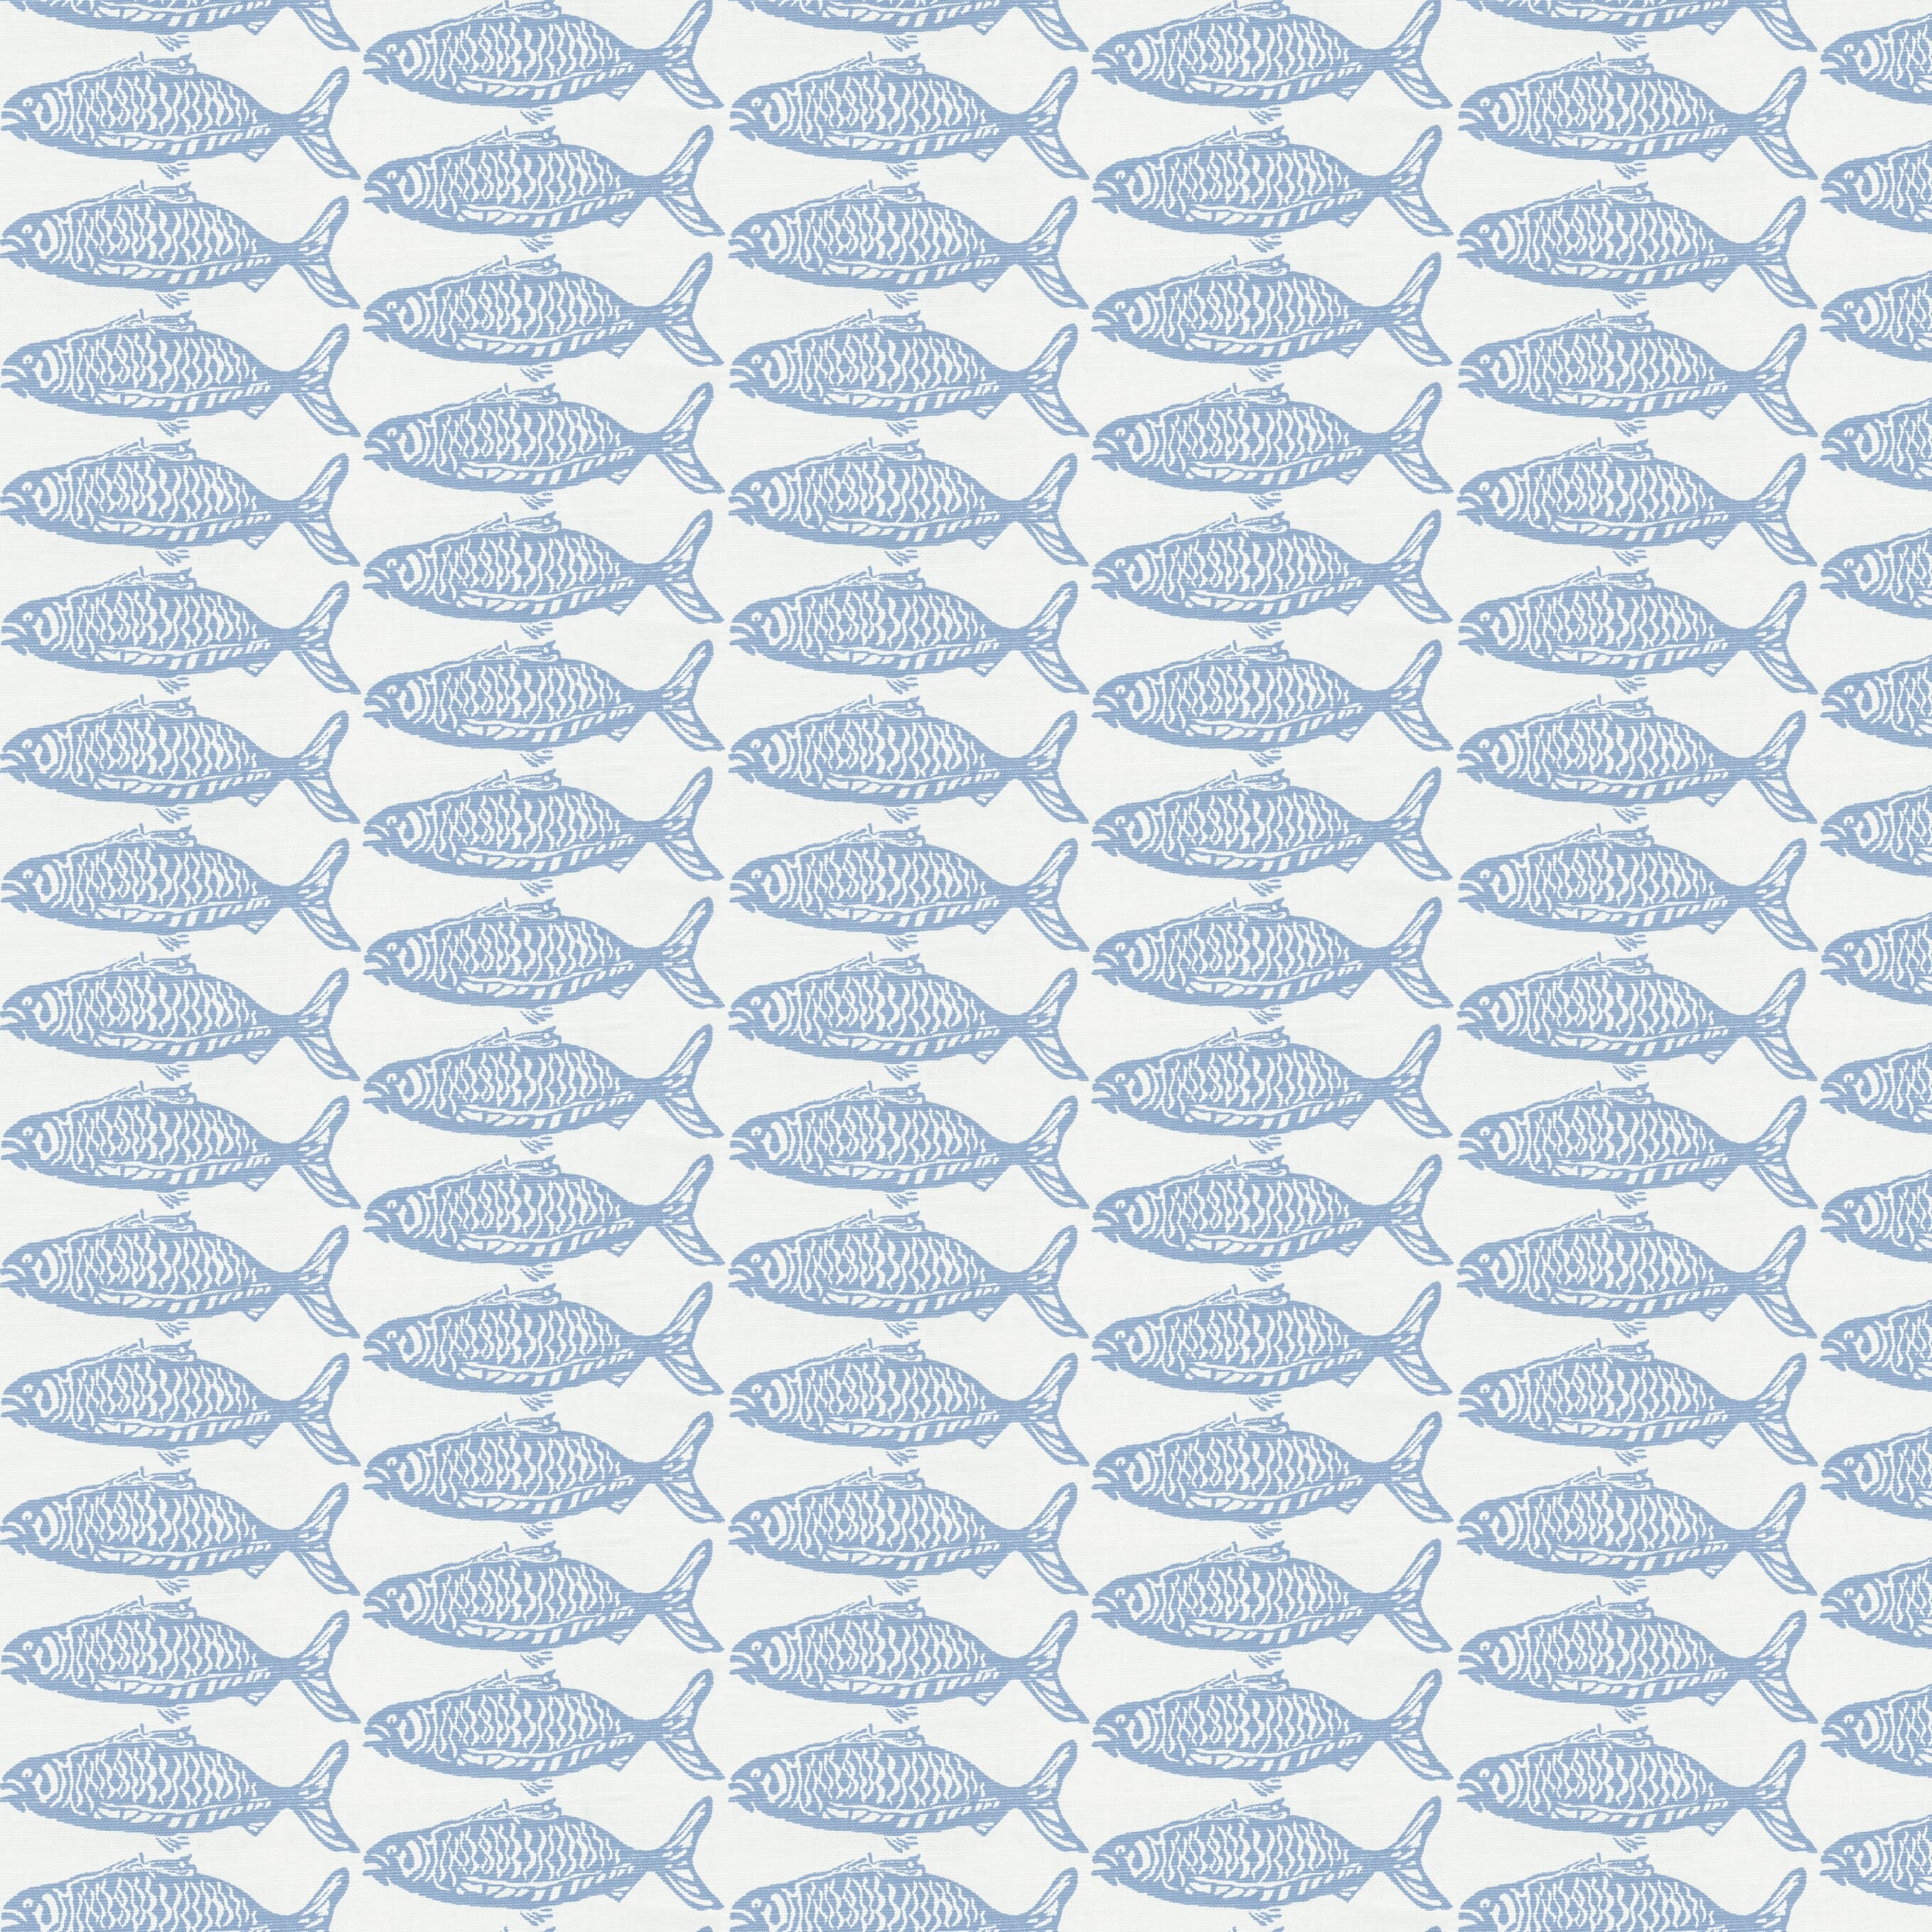 7826-2 School O Fish Breeze by Stout Fabric